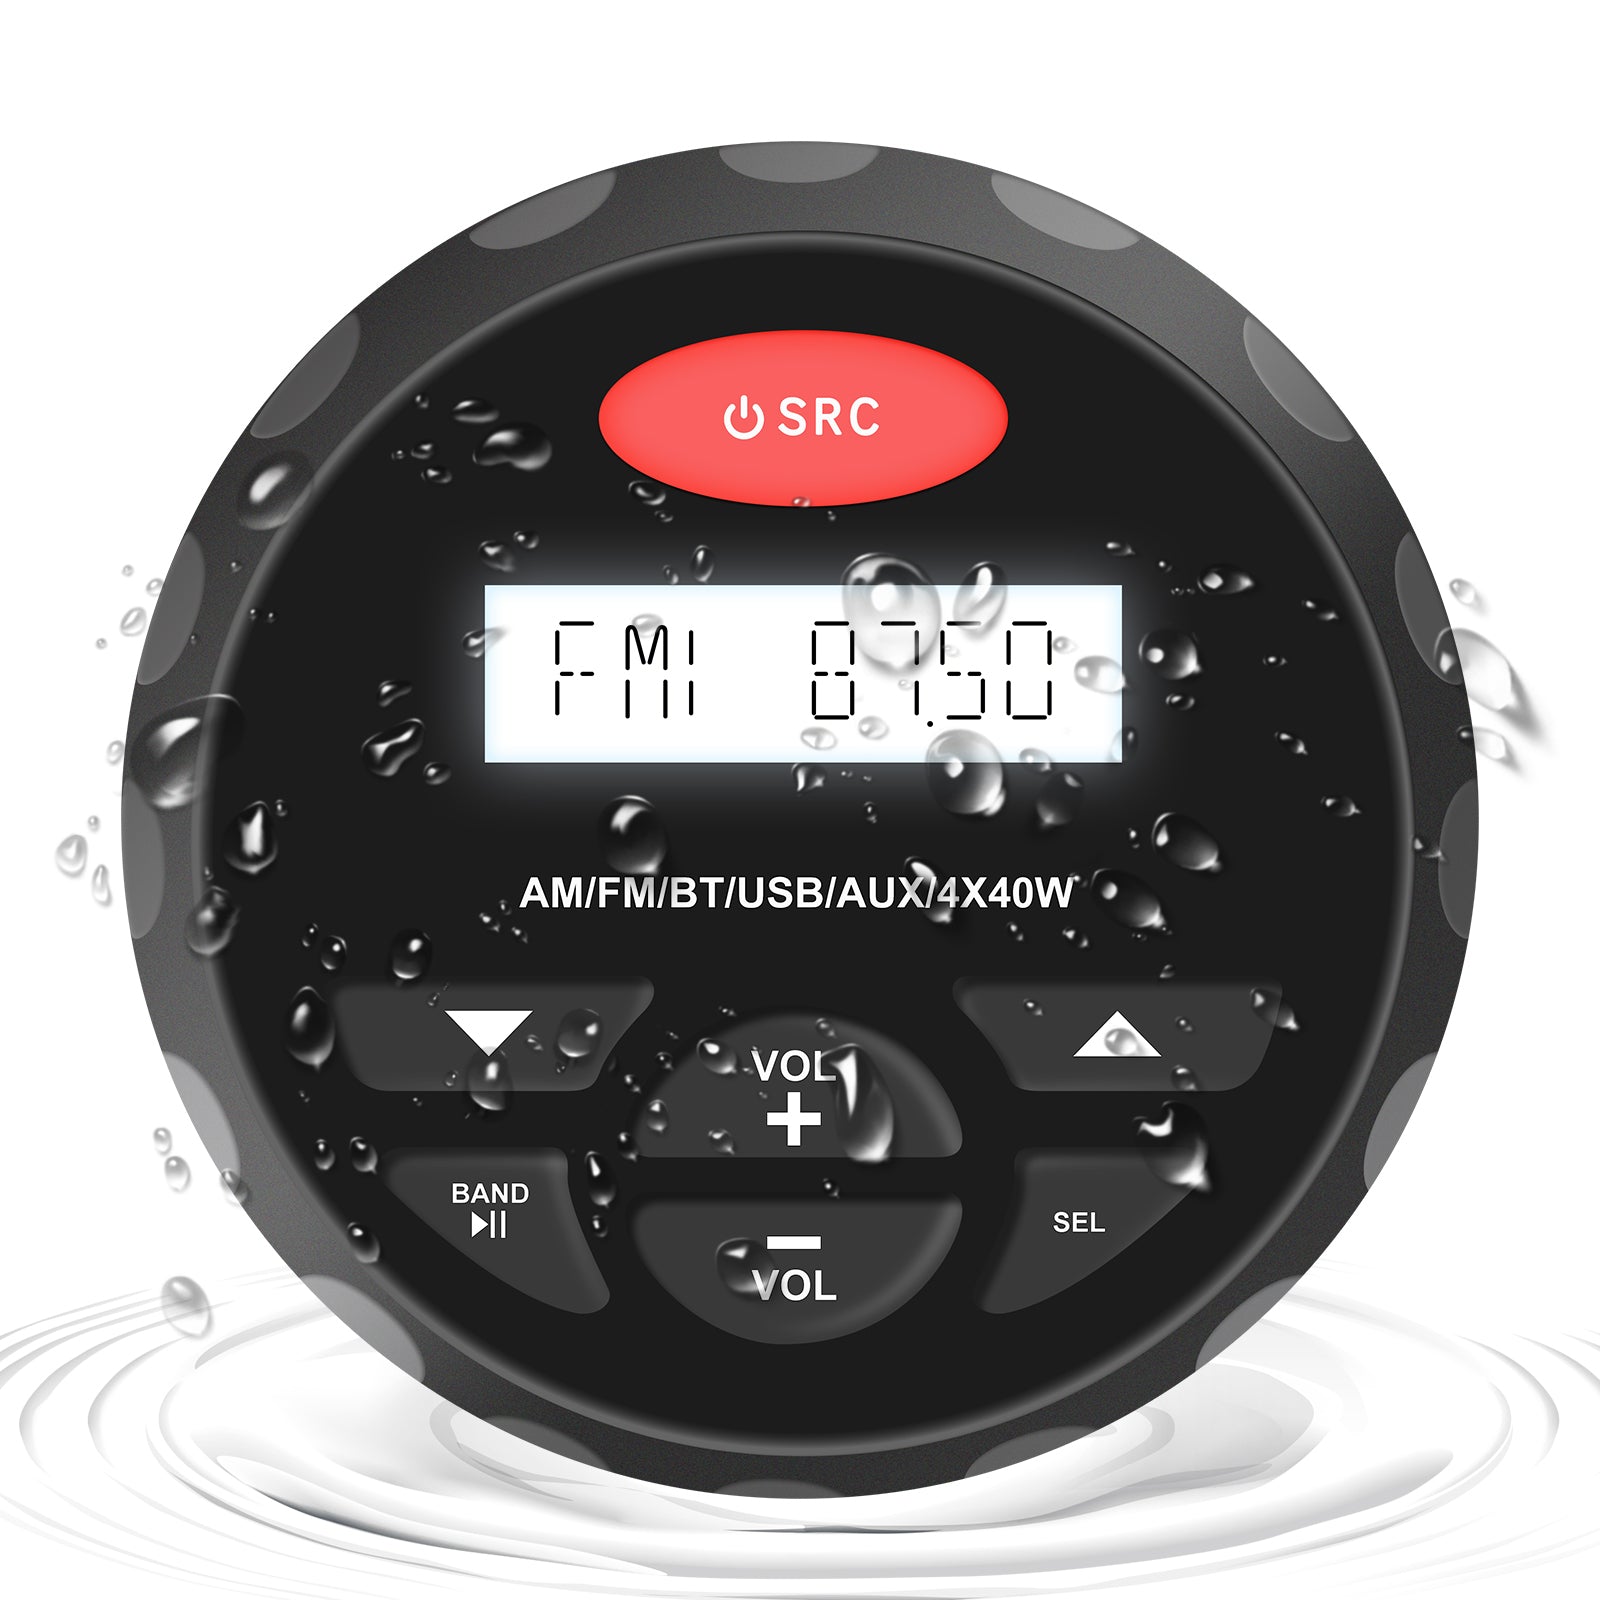 Herdio Bluetooth Marine Radio Receiver Waterproof VX110